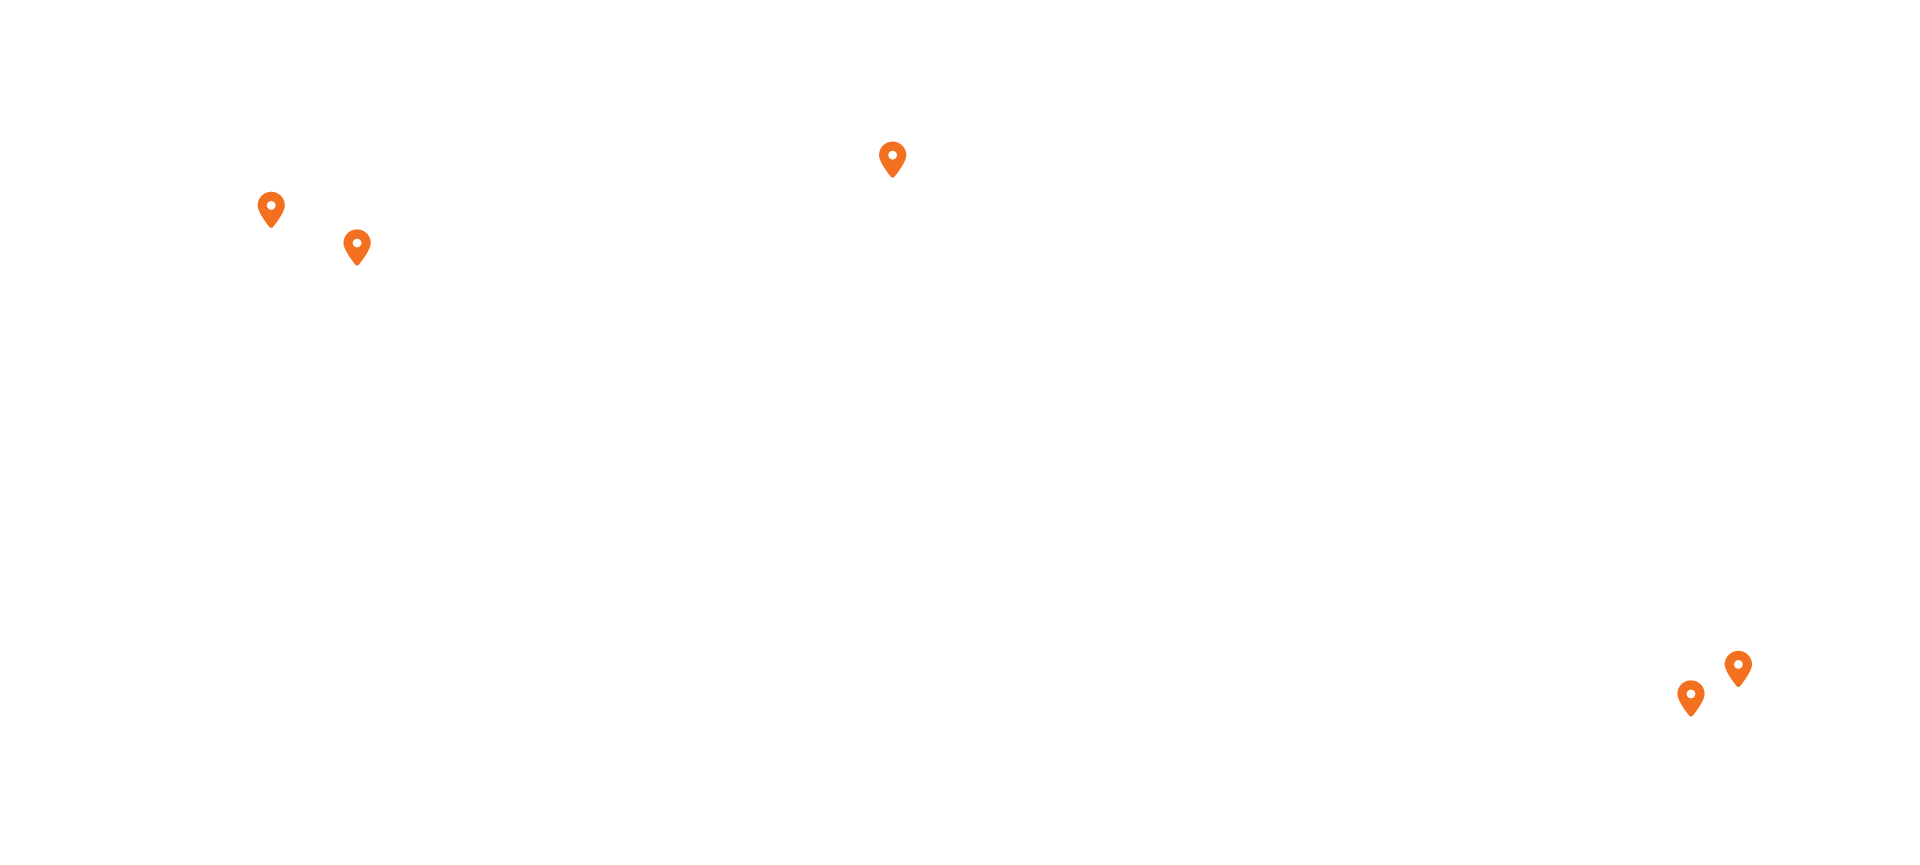 Map of PLEXSYS Locations